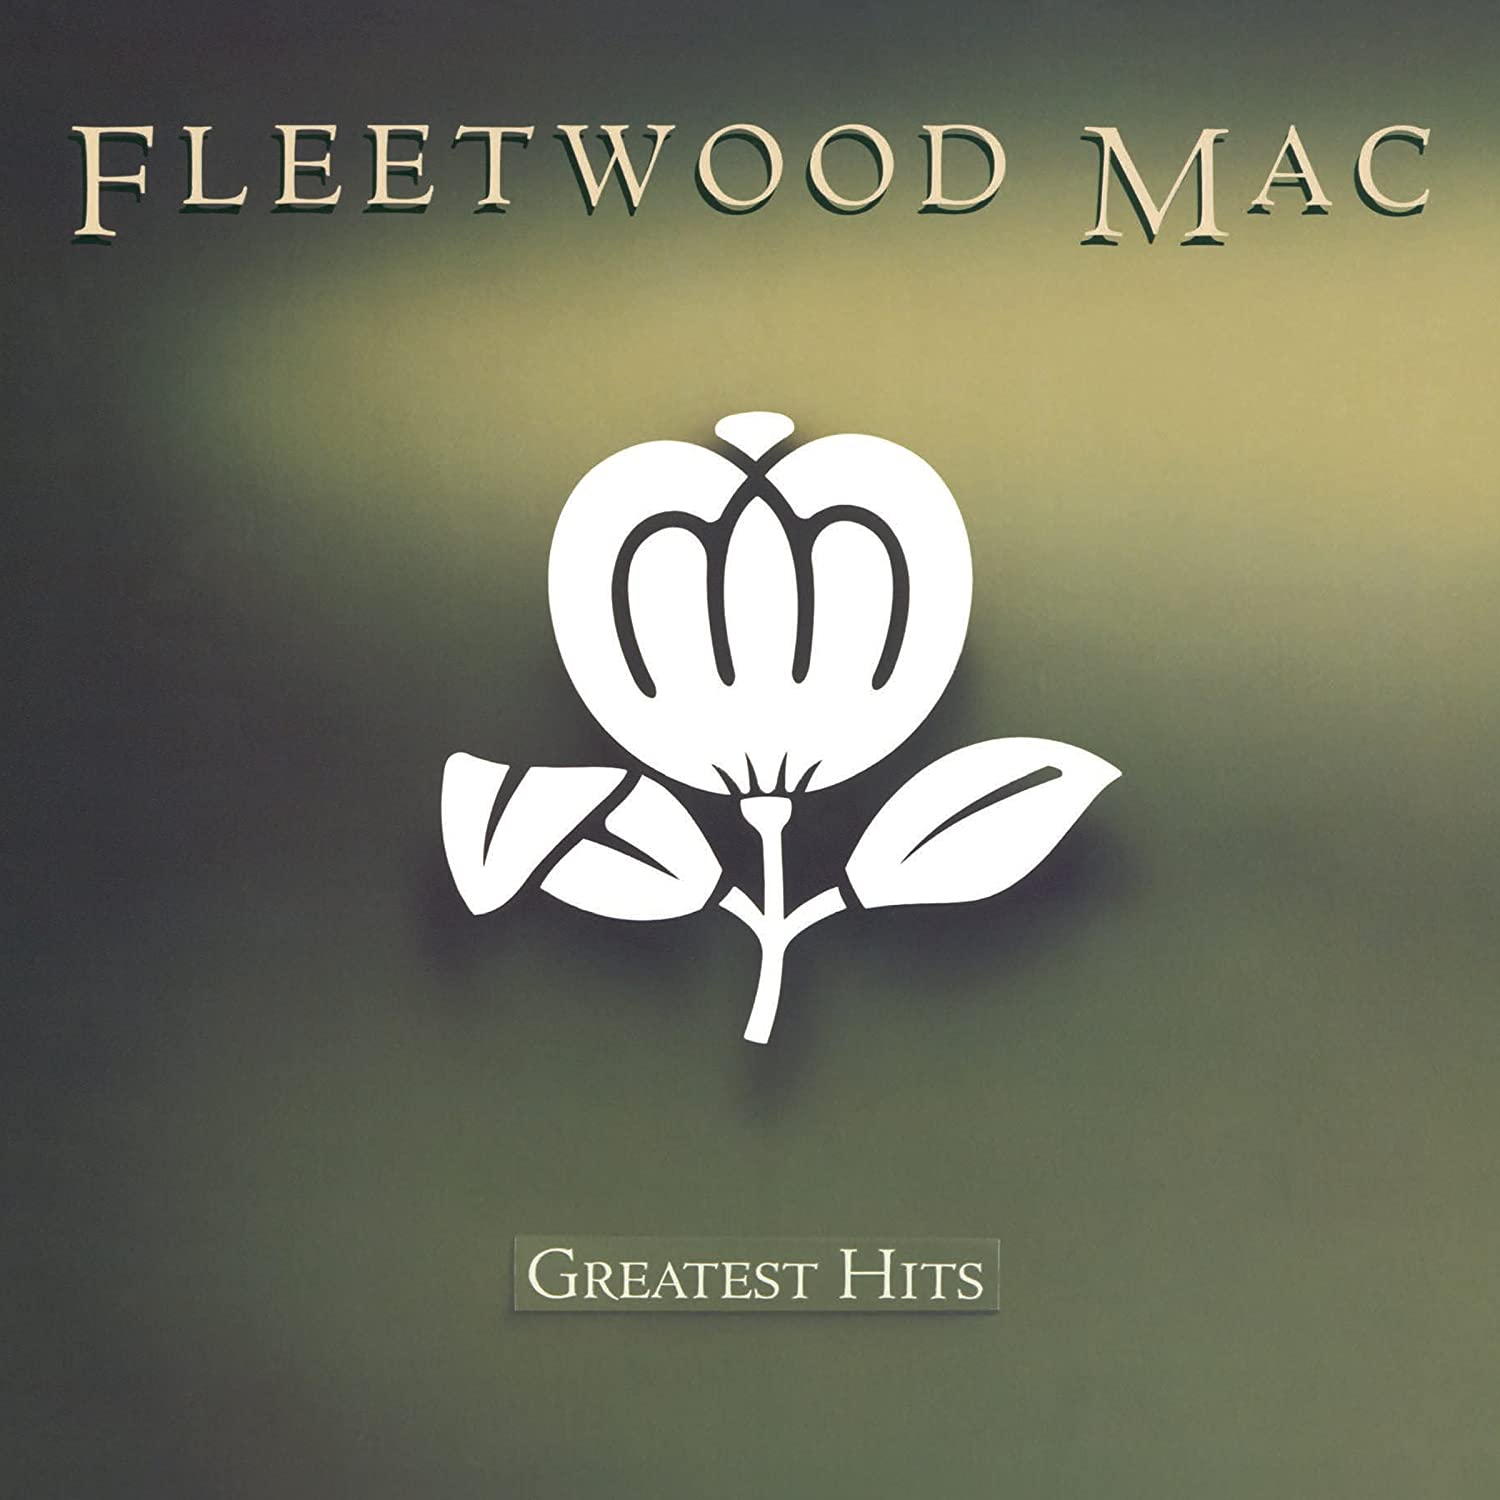 Fleetwood-Mac-Greatest-Hits-vinyl-record-album-front